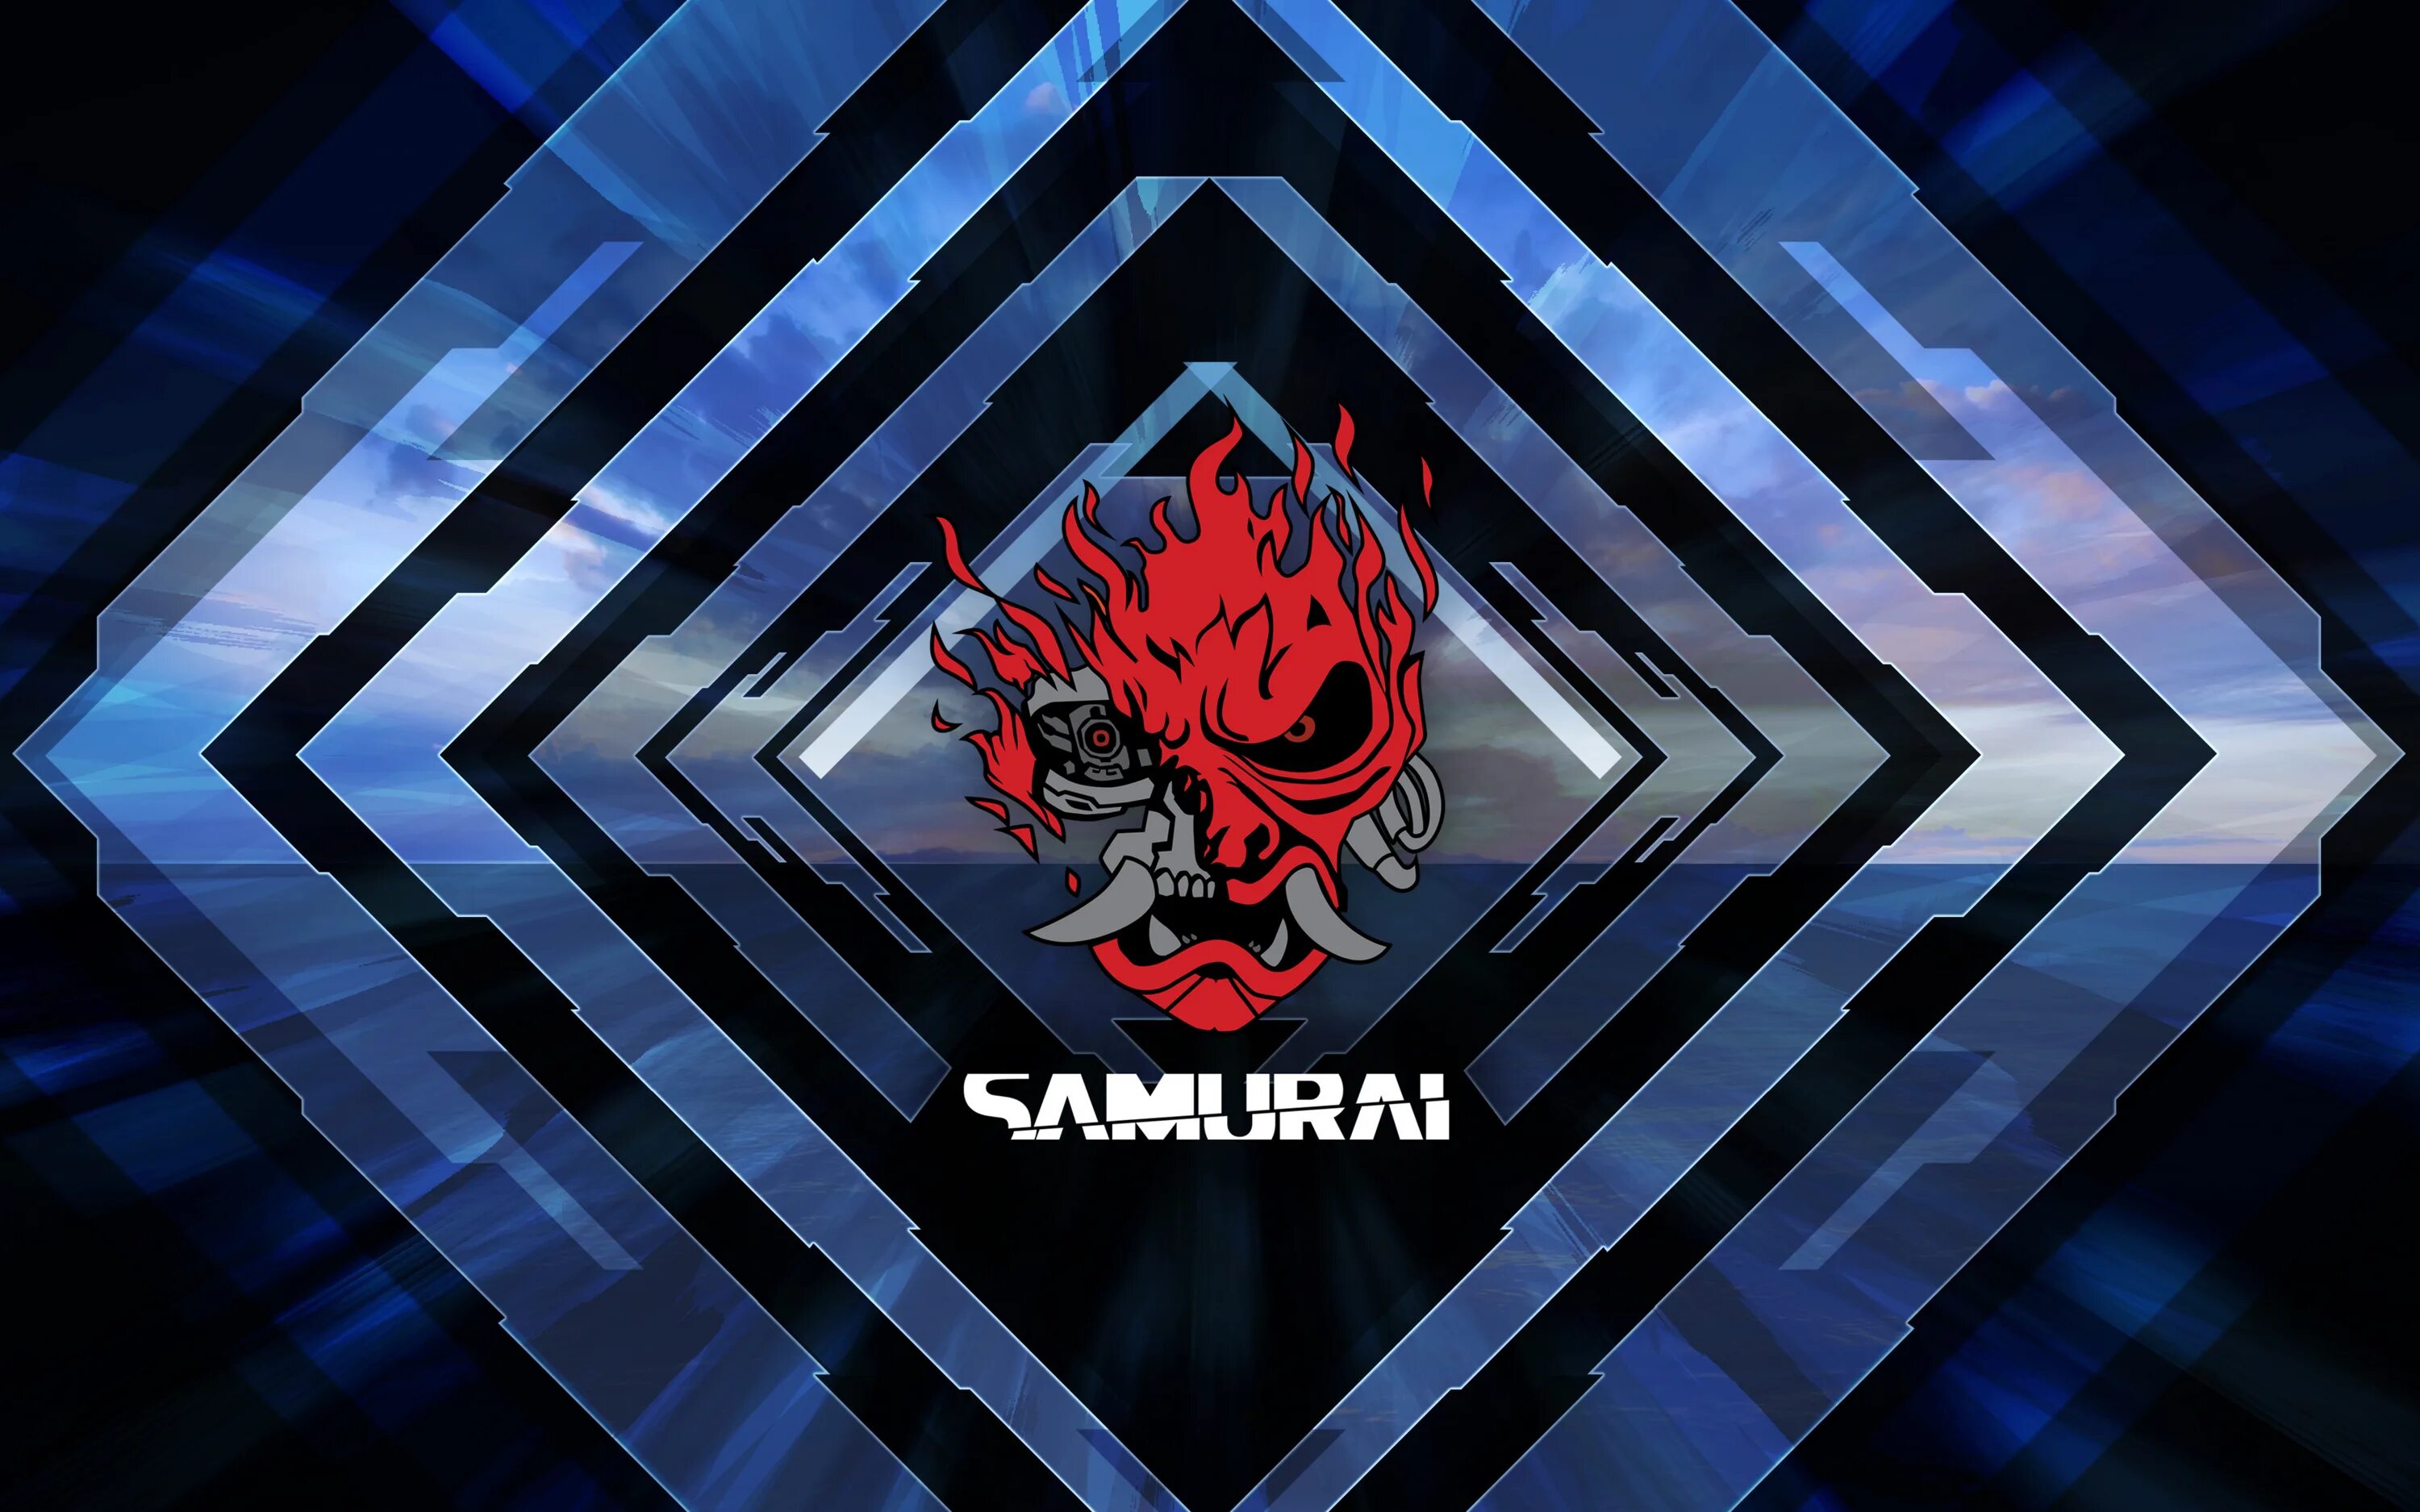 Самурай киберпанк 2077. Cyberpunk 2077 Samurai logo. Группа Самурай киберпанк 2077. Samurai группа